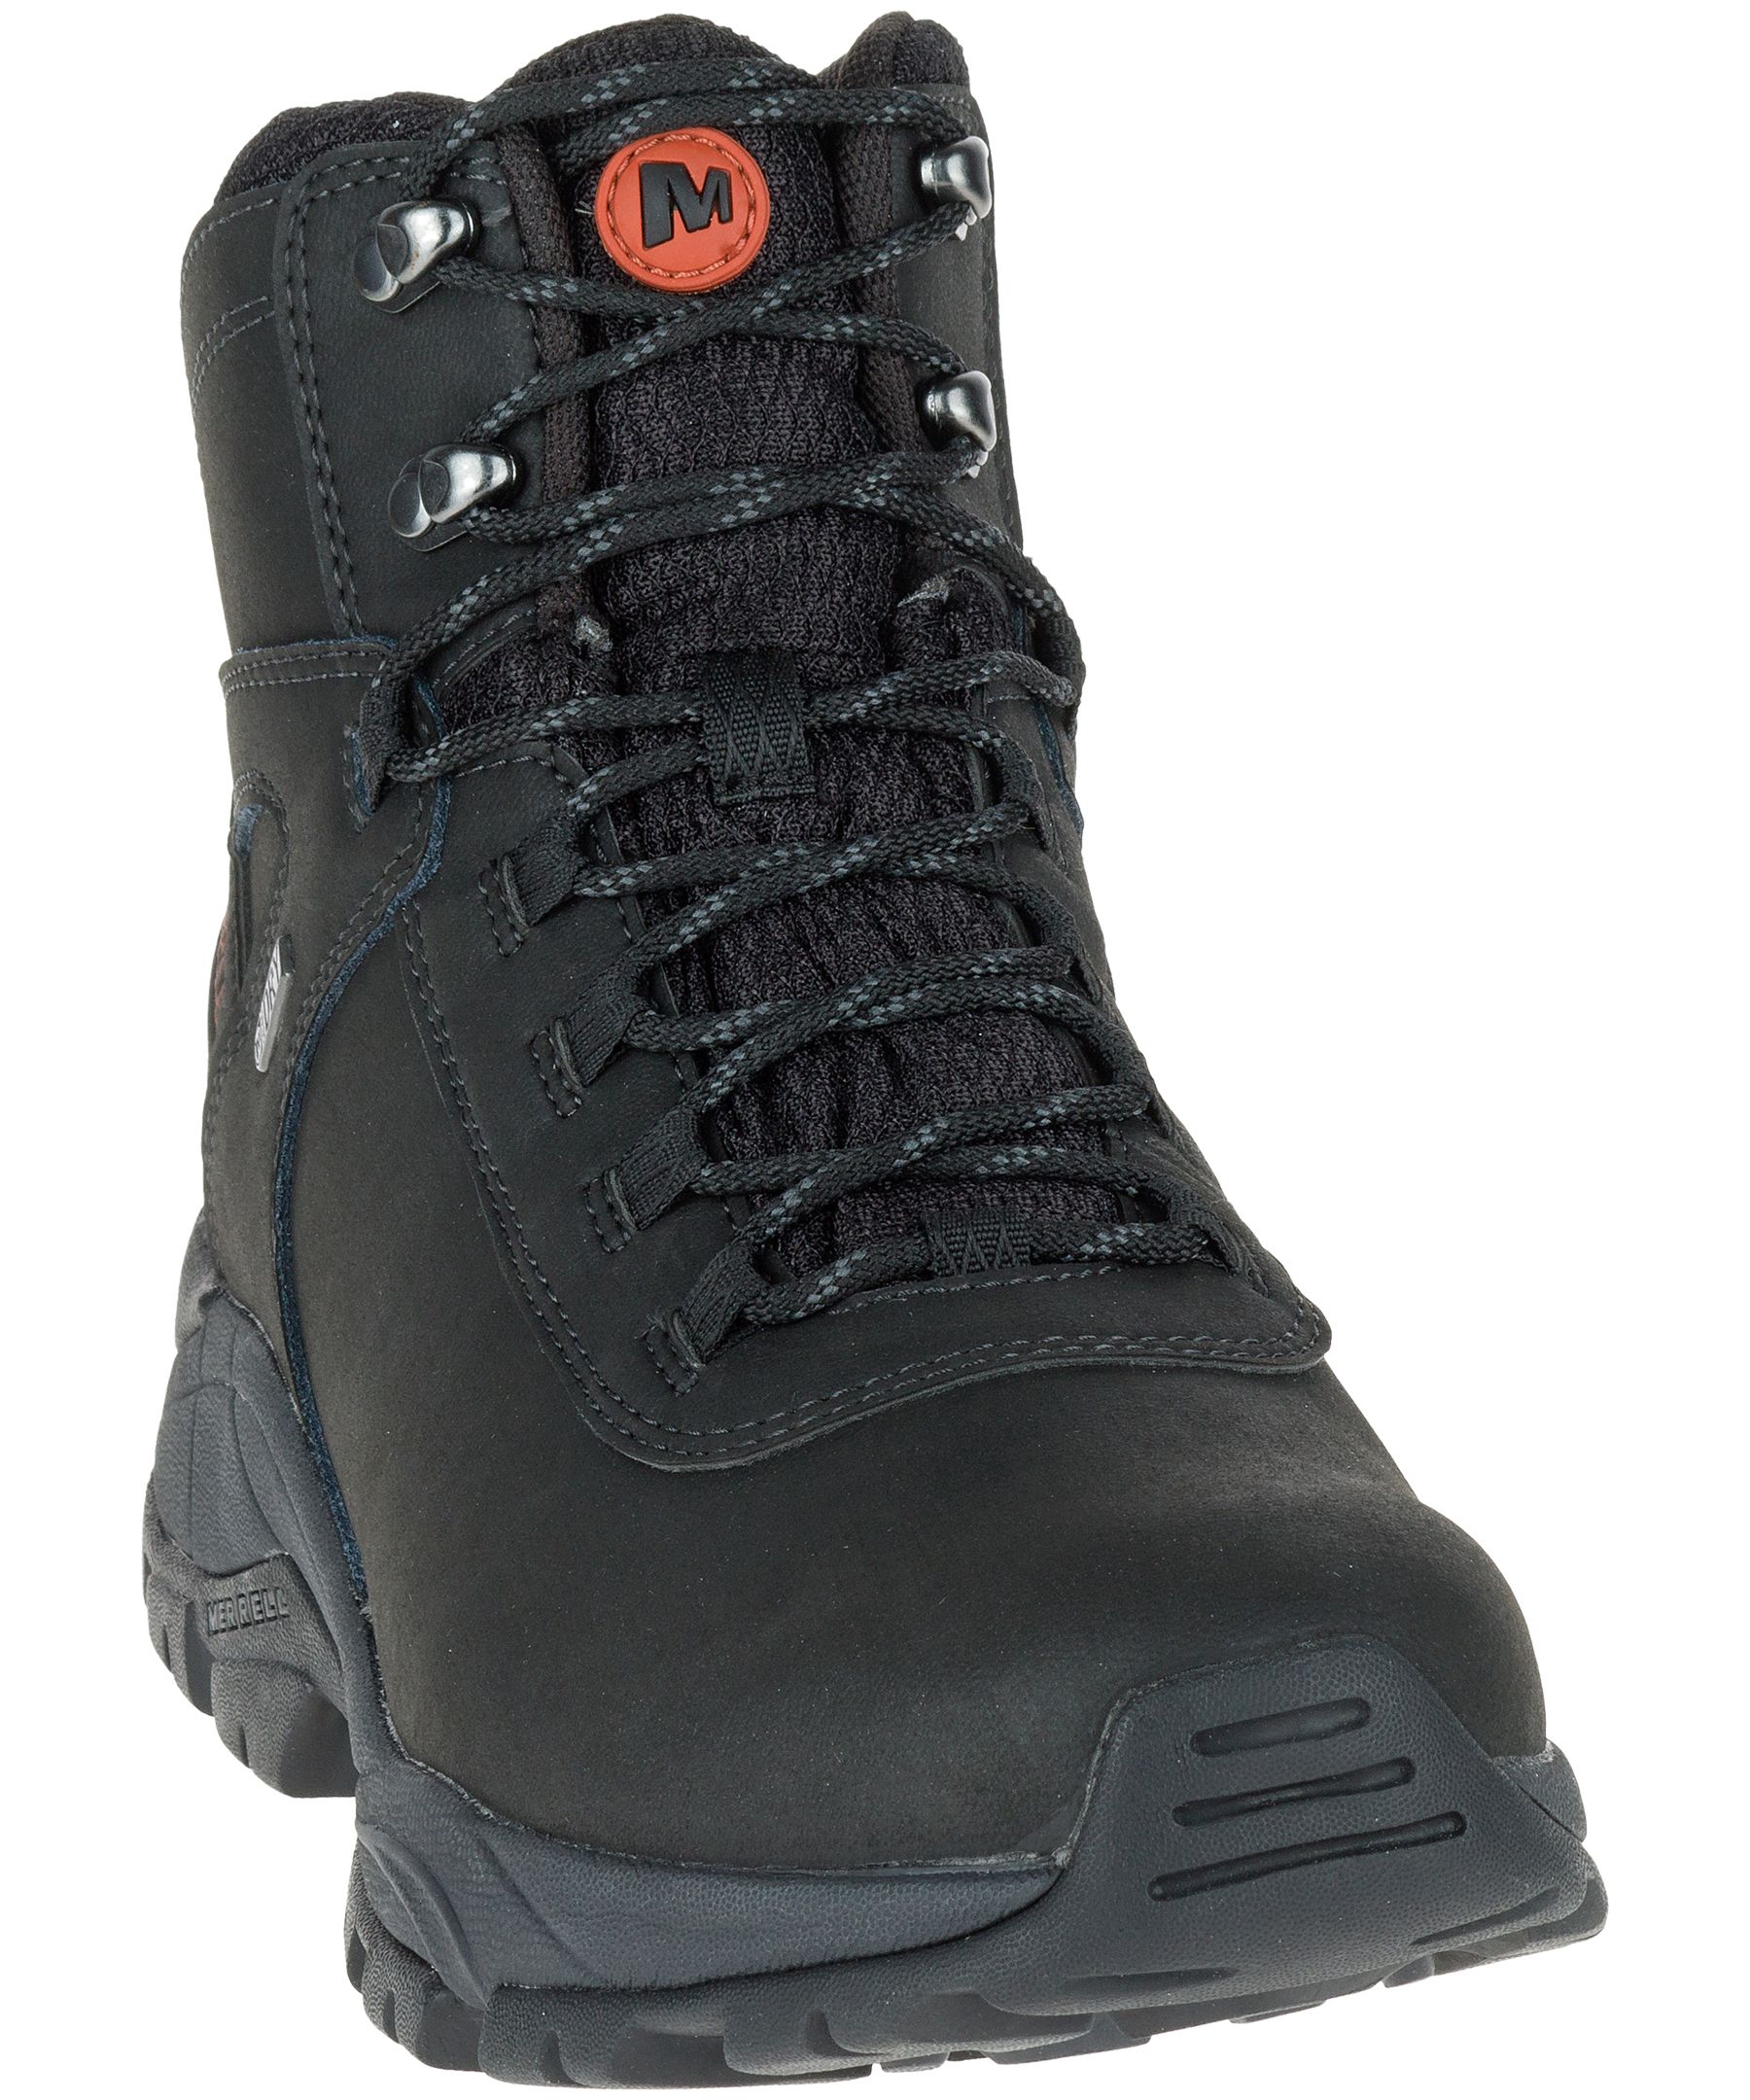 Merrell Men's VEGO Waterproof Leather Hiking Boots - Black | Marks